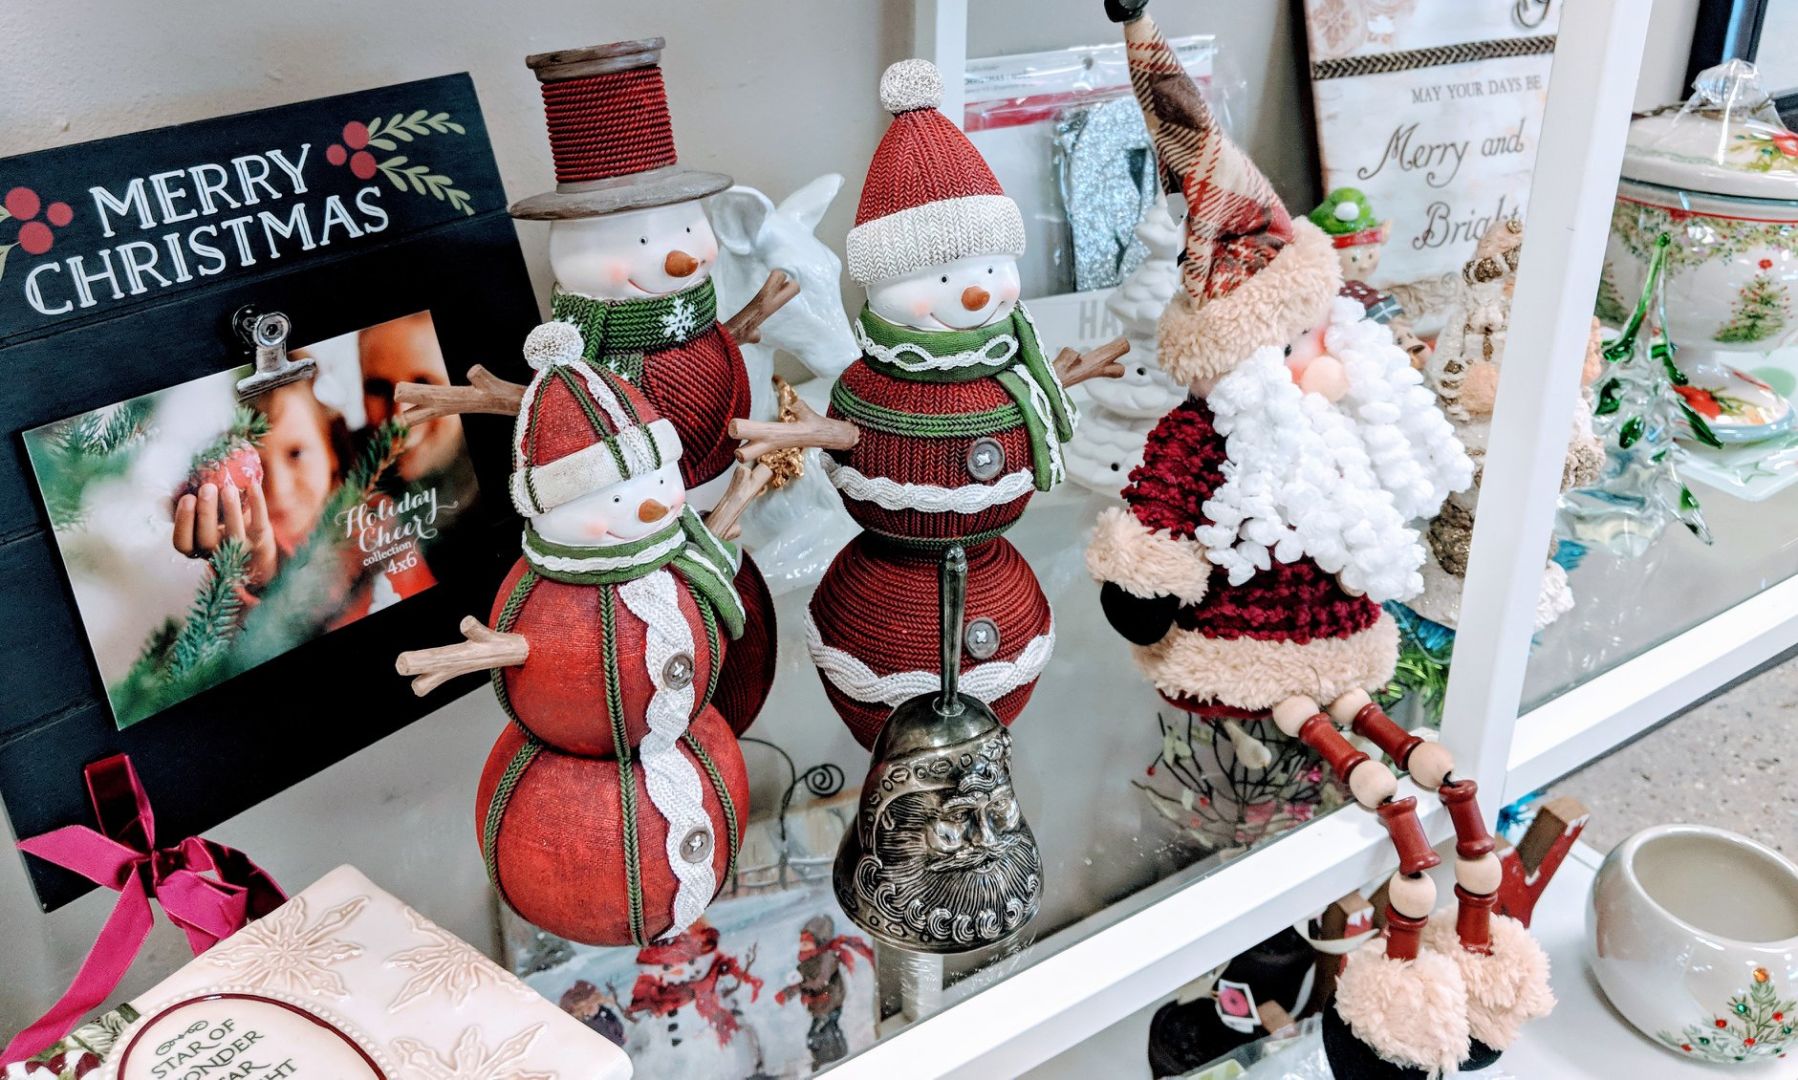 Small snowmen and Santa Claus decorations.